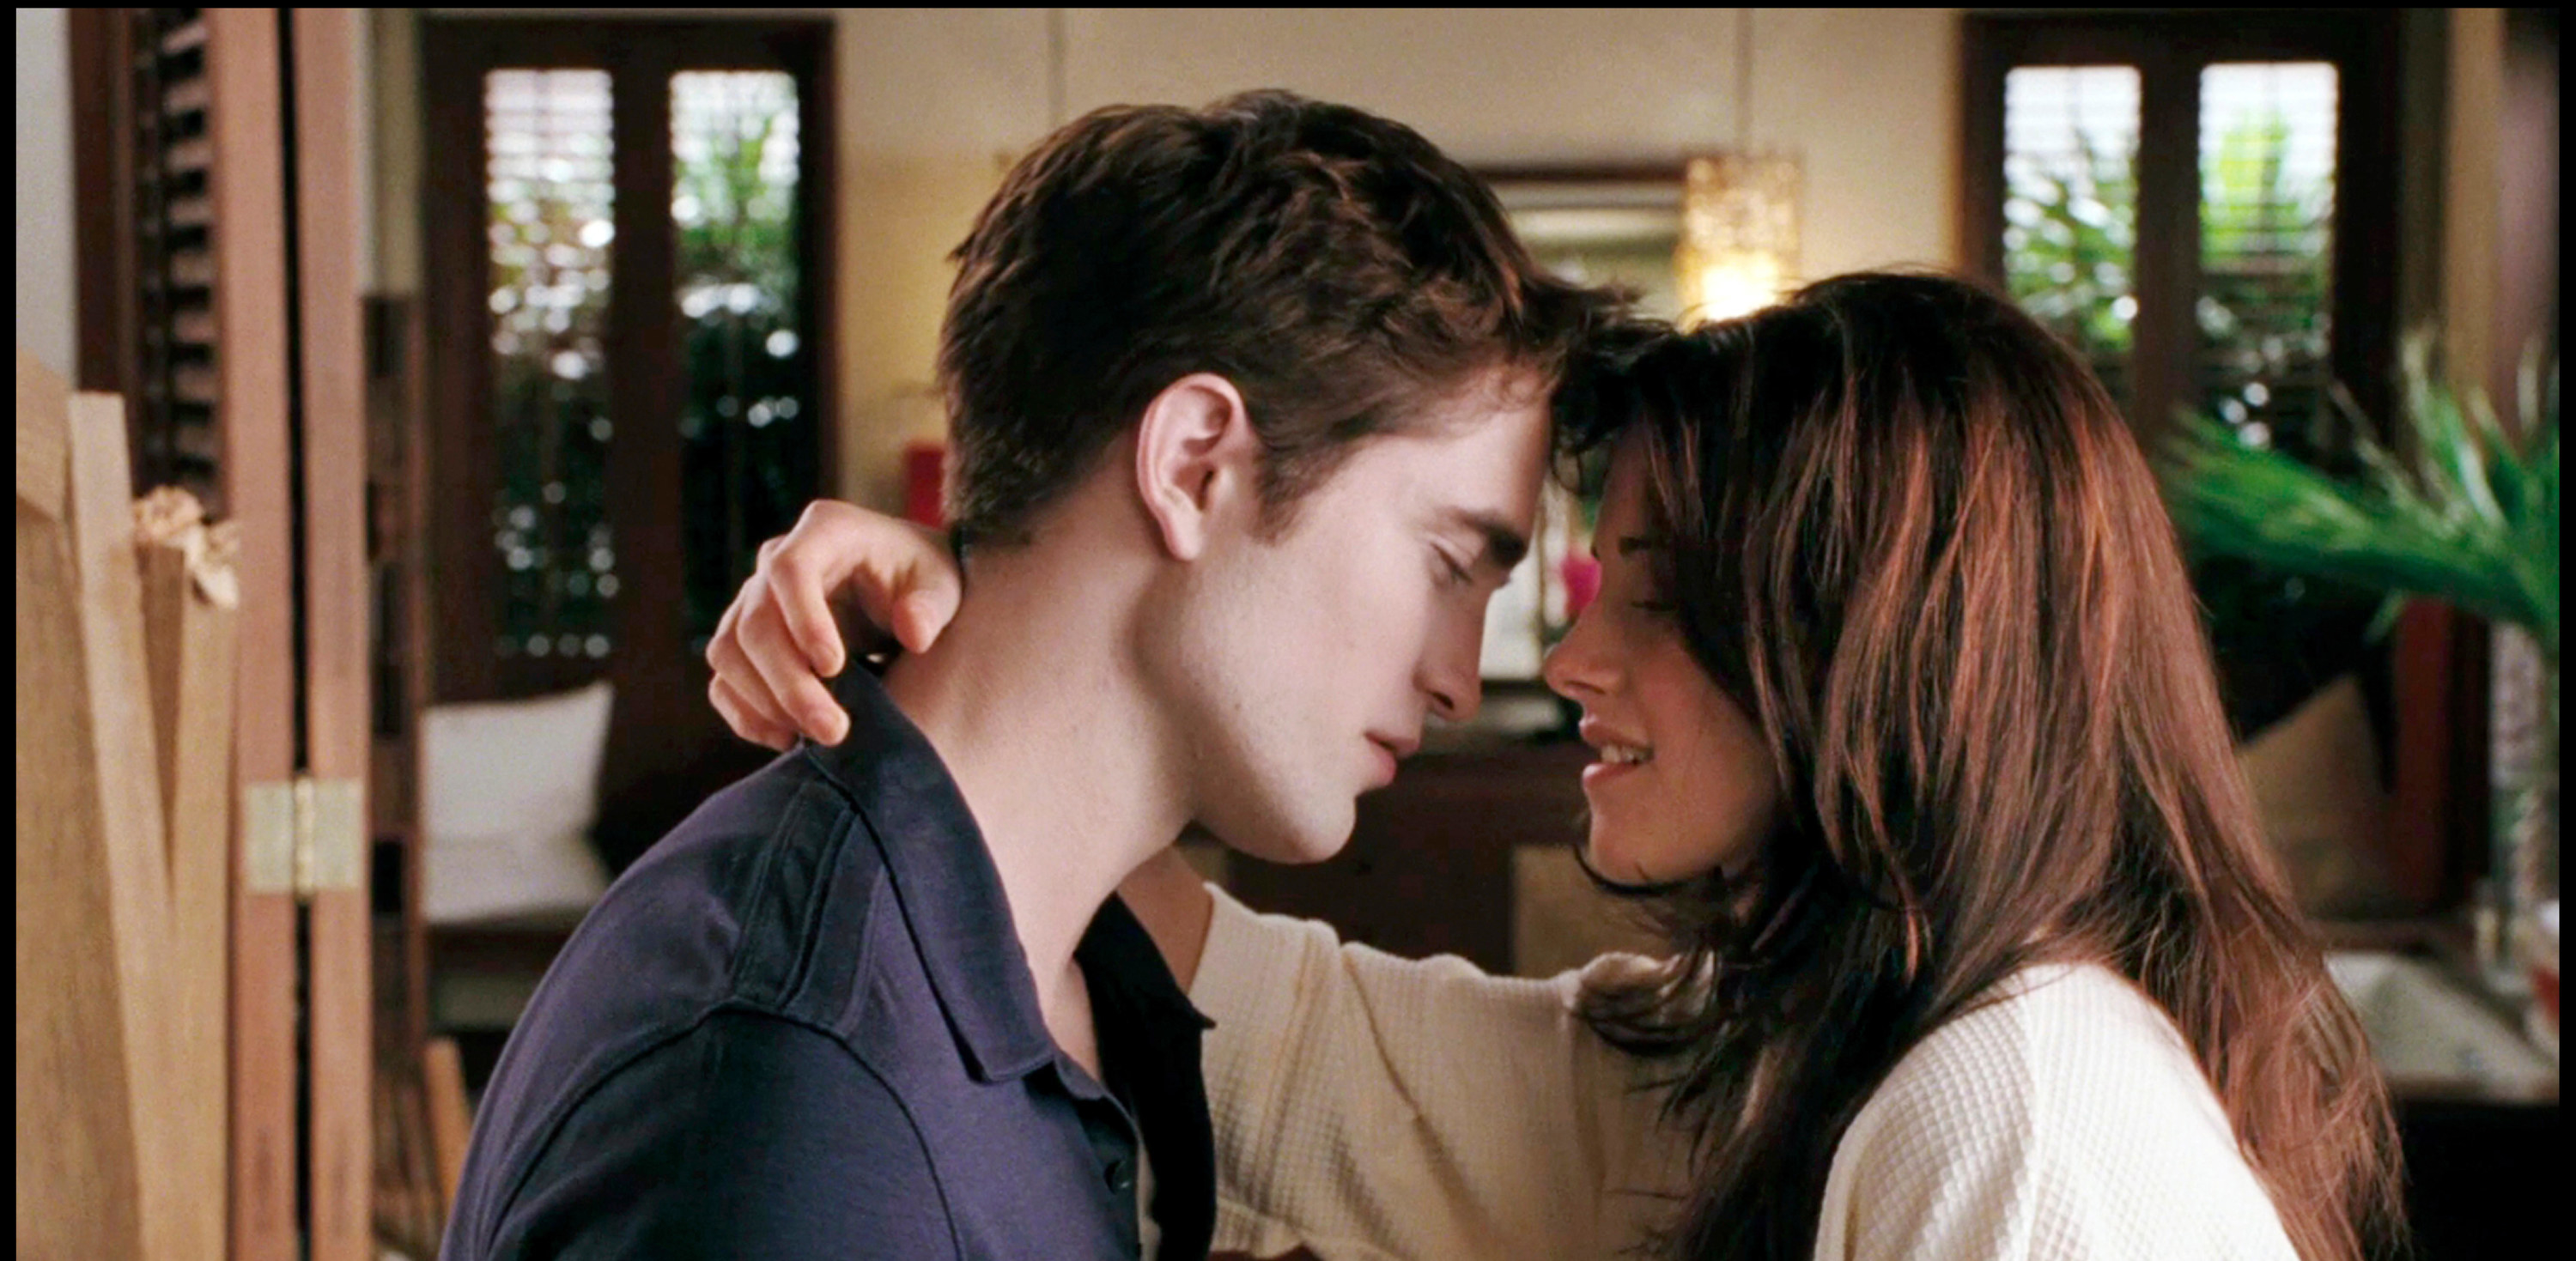 Robert Pattinson and Kristen Stewart embracing in Isle Esme in Twilight.